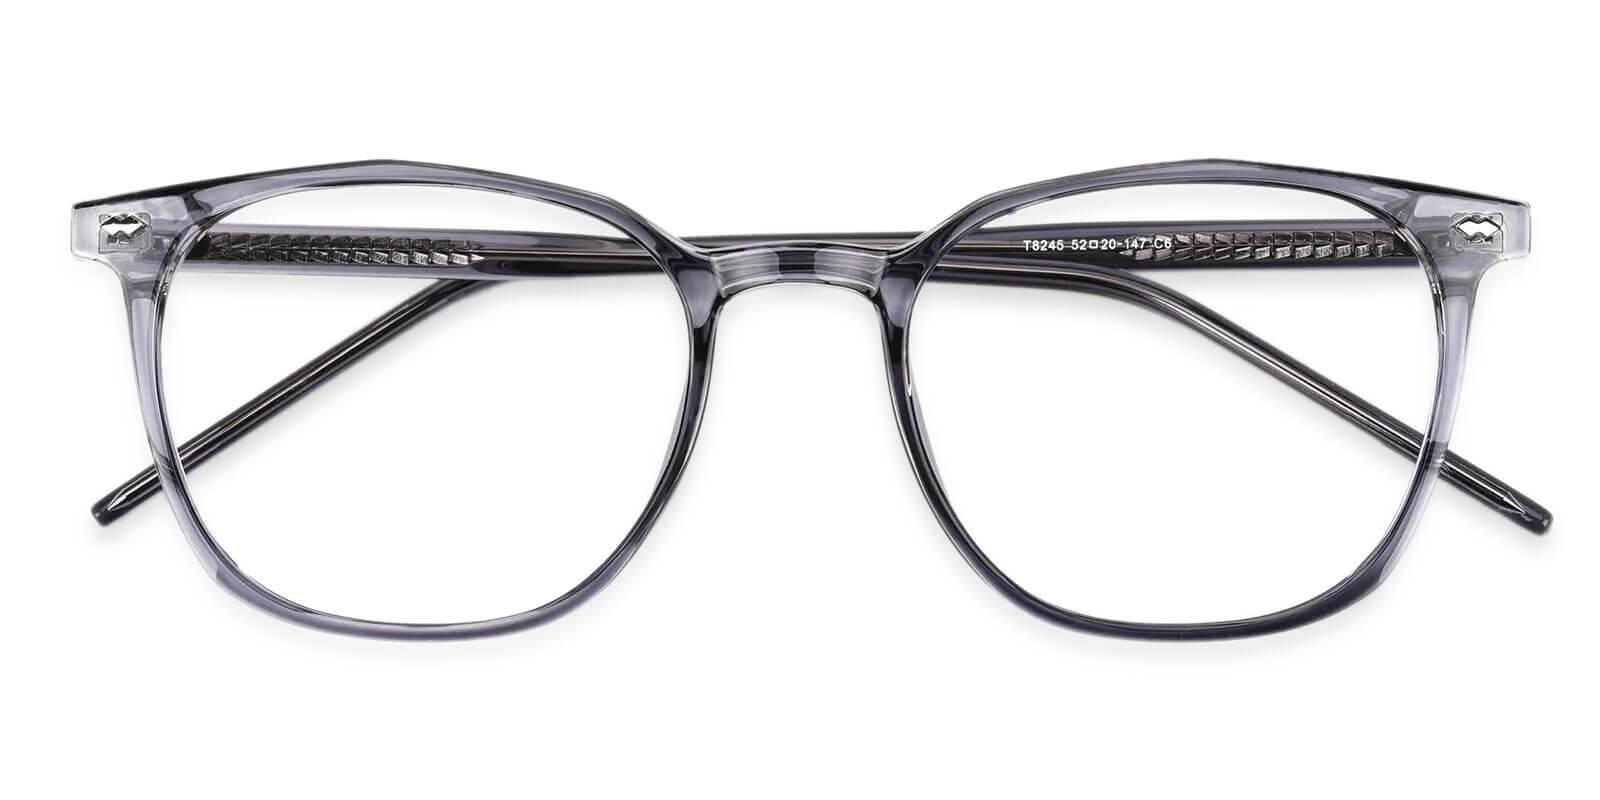 Prodigy Gray Acetate Eyeglasses , SpringHinges , UniversalBridgeFit Frames from ABBE Glasses